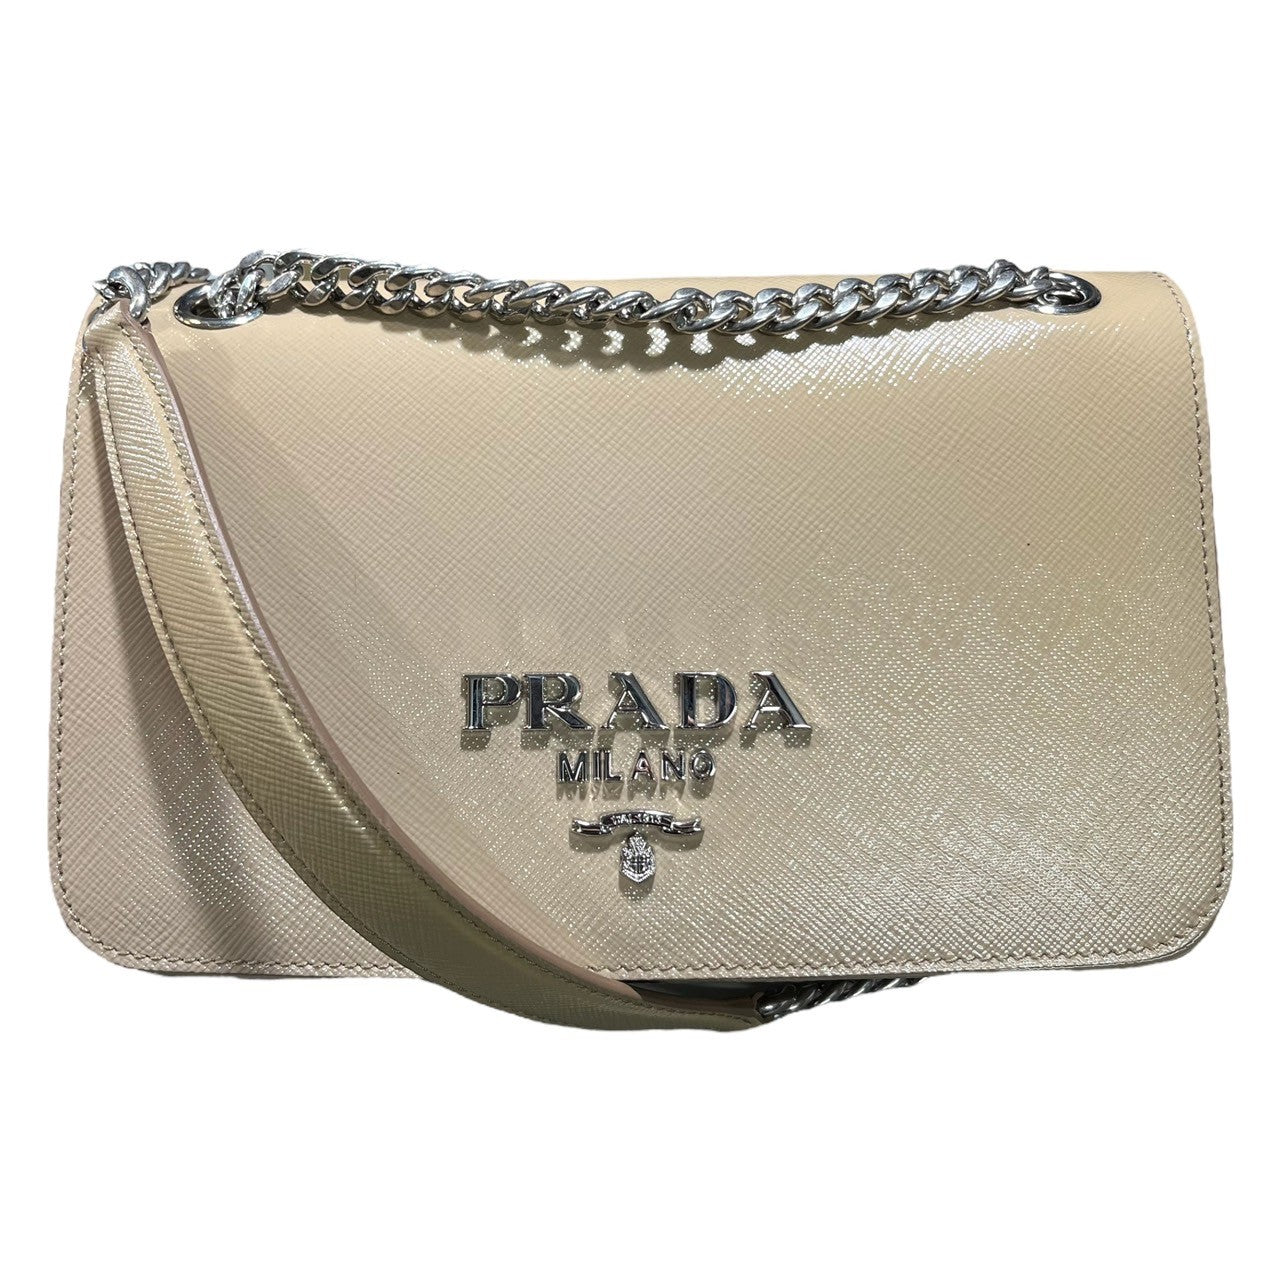 PRADA(プラダ)  Saffiano chain shoulder bag サフィアーノ チェーン ショルダーバッグ 1BD147 ベージュ ロゴ ハンド 斜め掛け